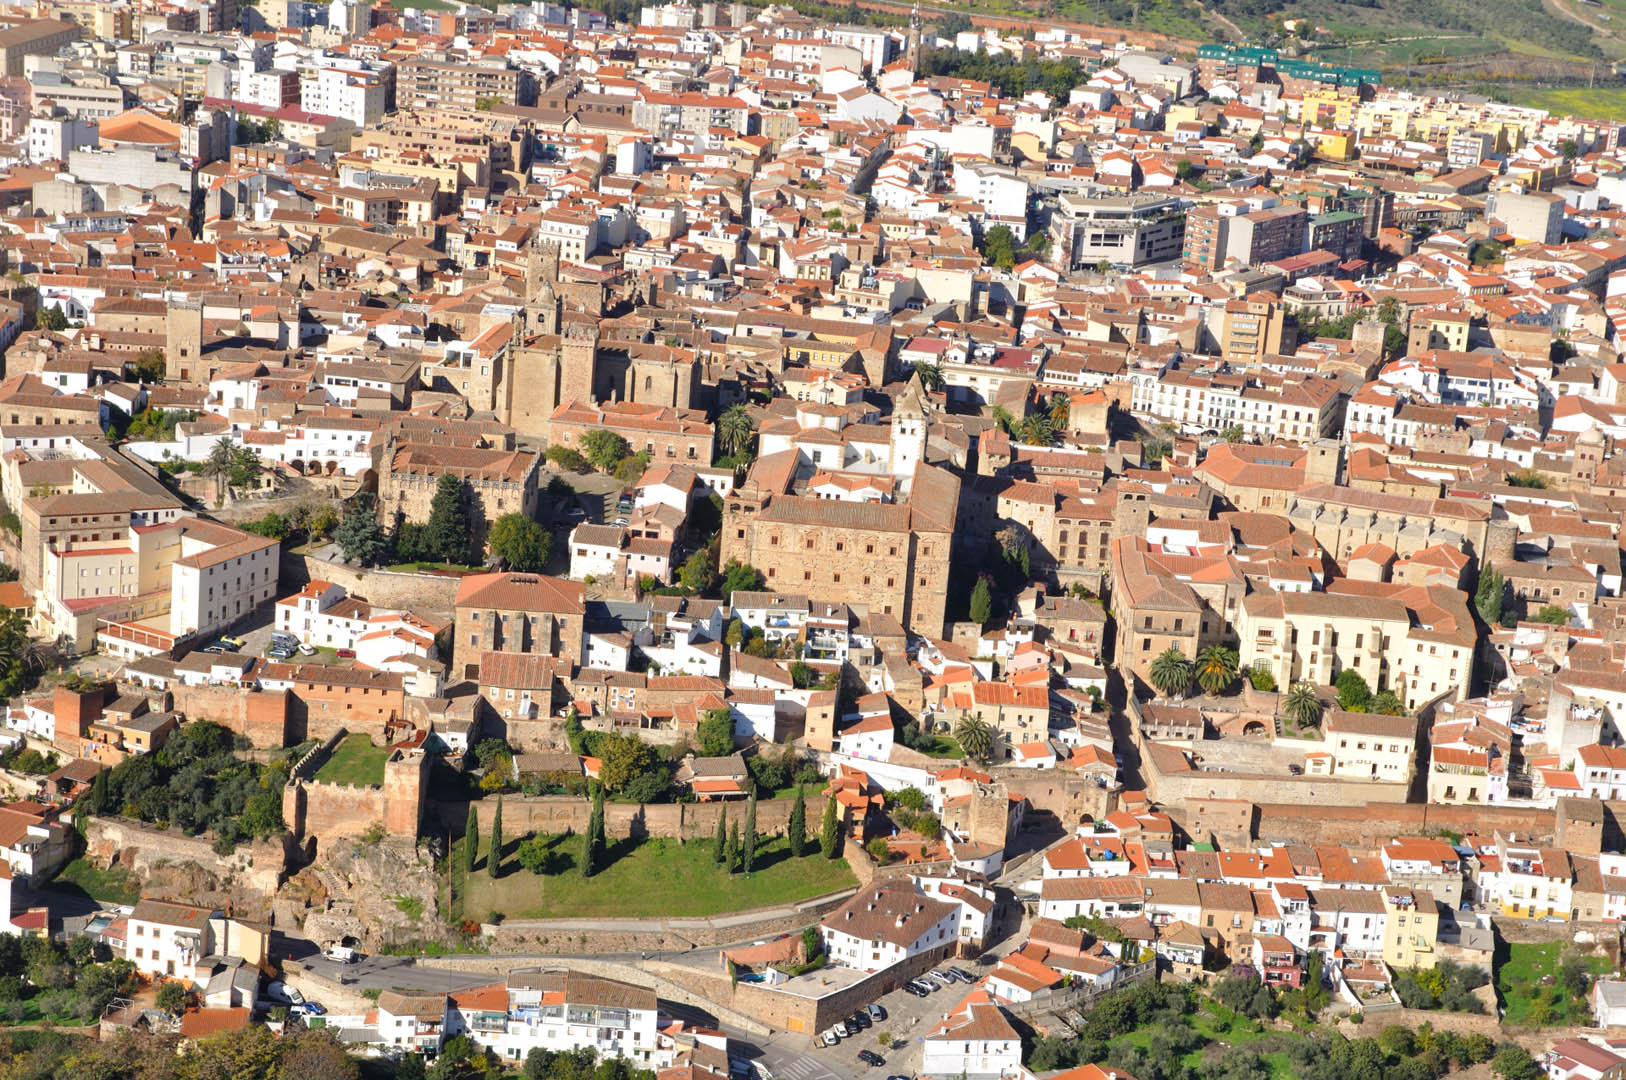 Vista aerea de Cáceres